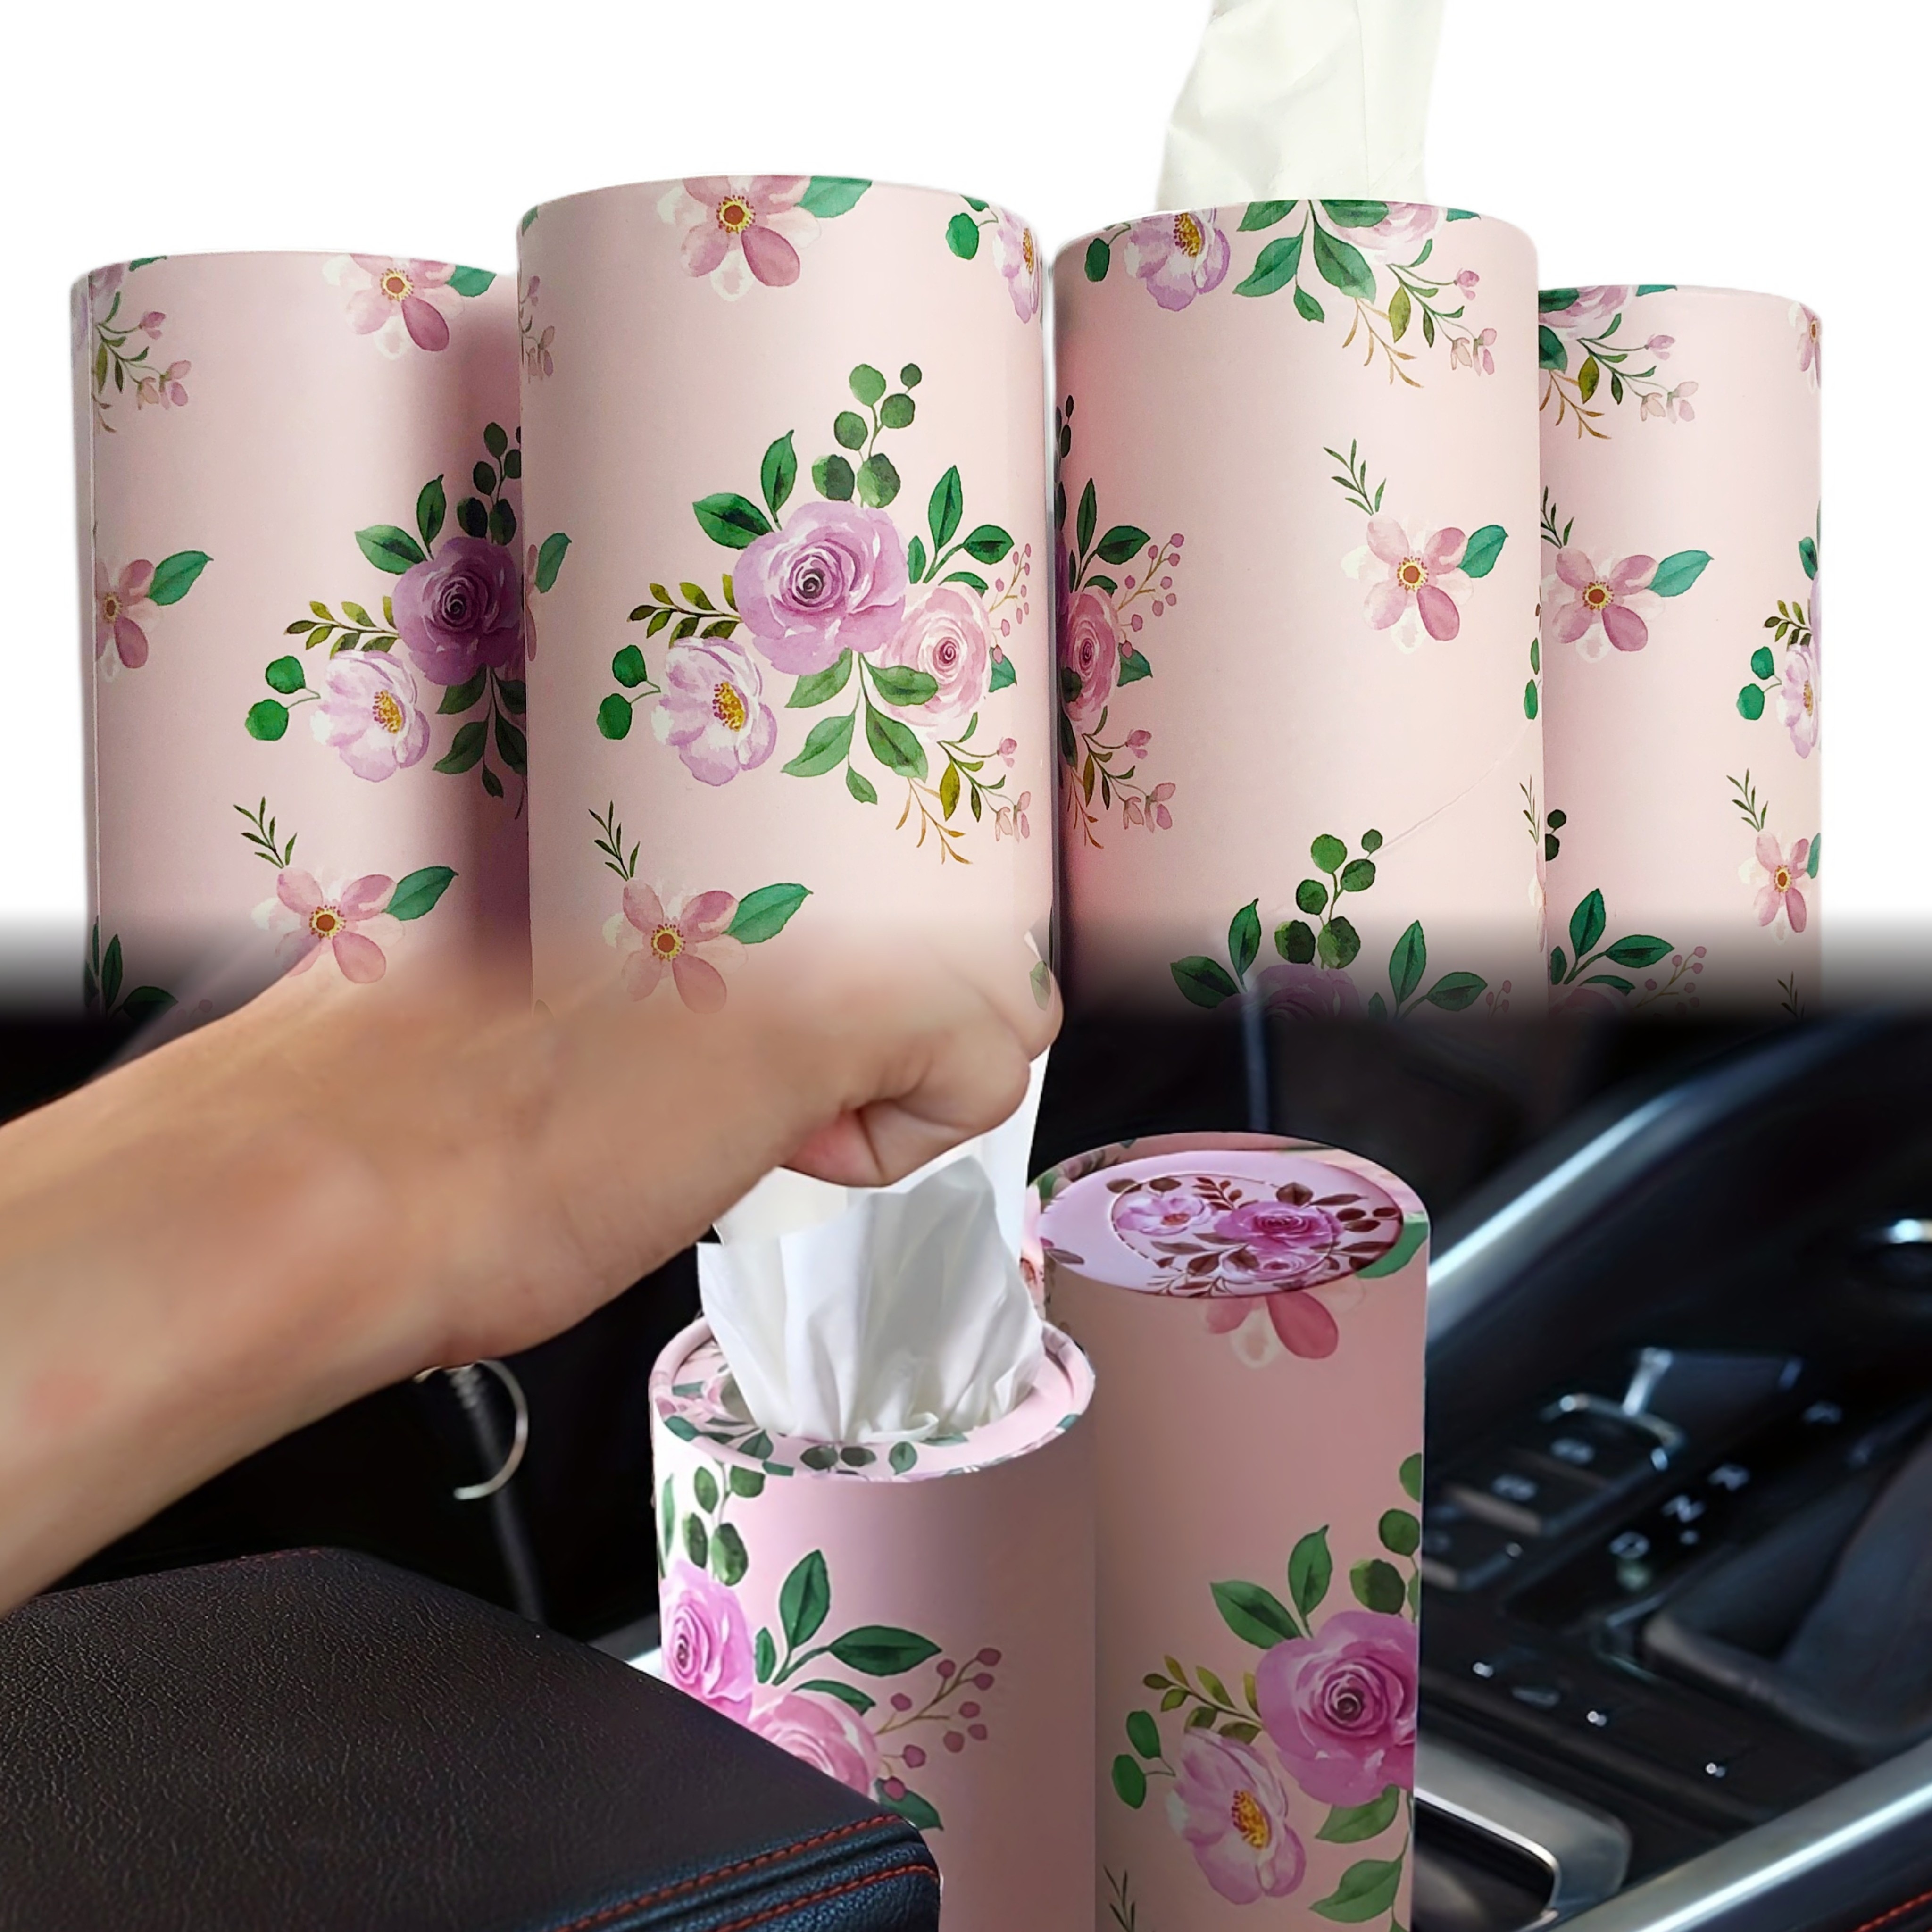 Car Tissue Holder with Facial Tissues Bulk - 4 PK Car Tissues Cylinder,  Tissue Holder for Car, Travel Tissues for Car Cup Holder, Refill Car Tissue